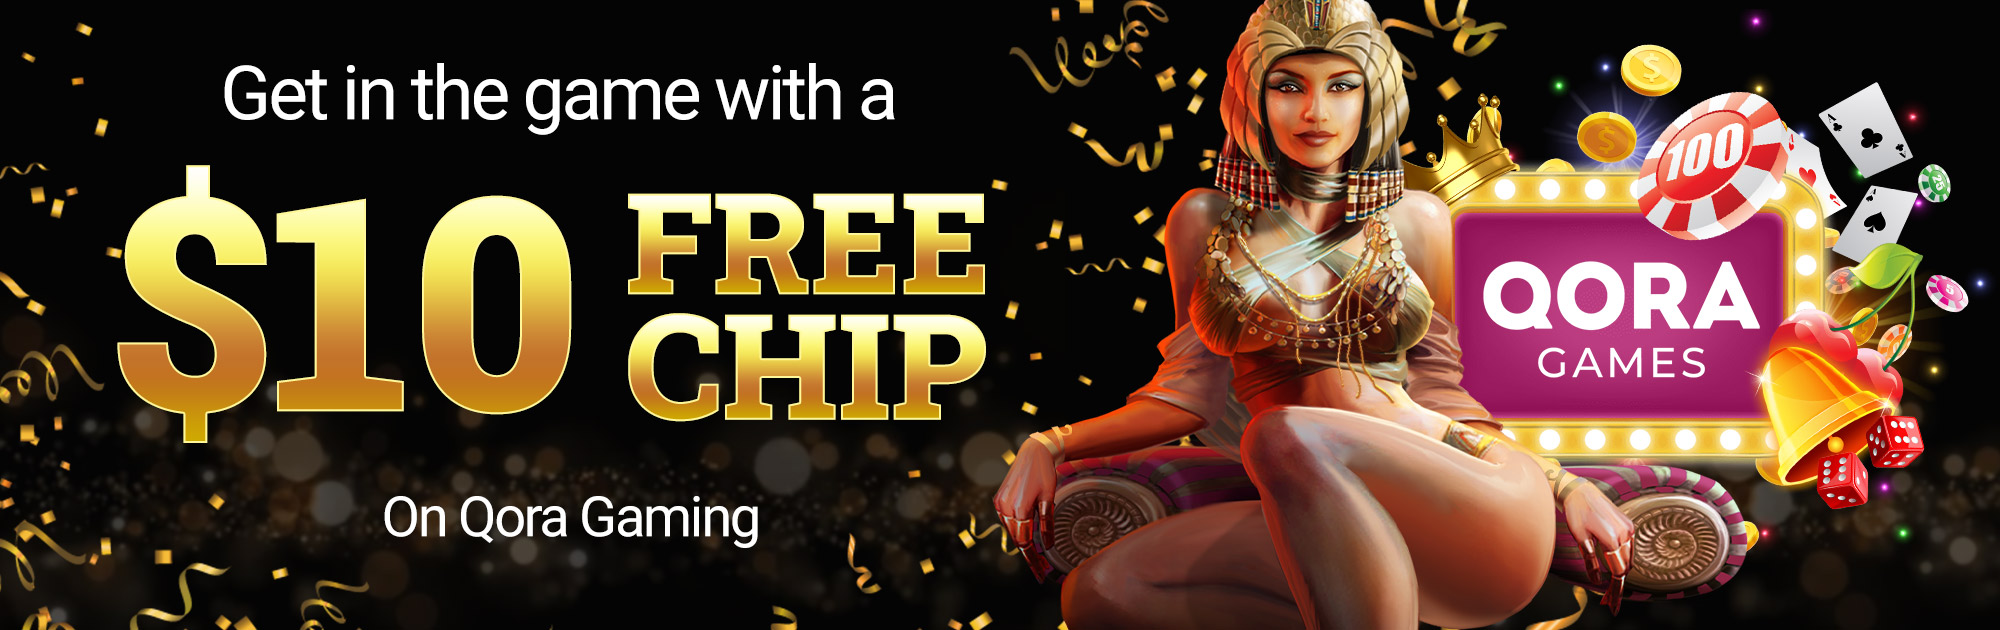 Qora Free Chip Promotions